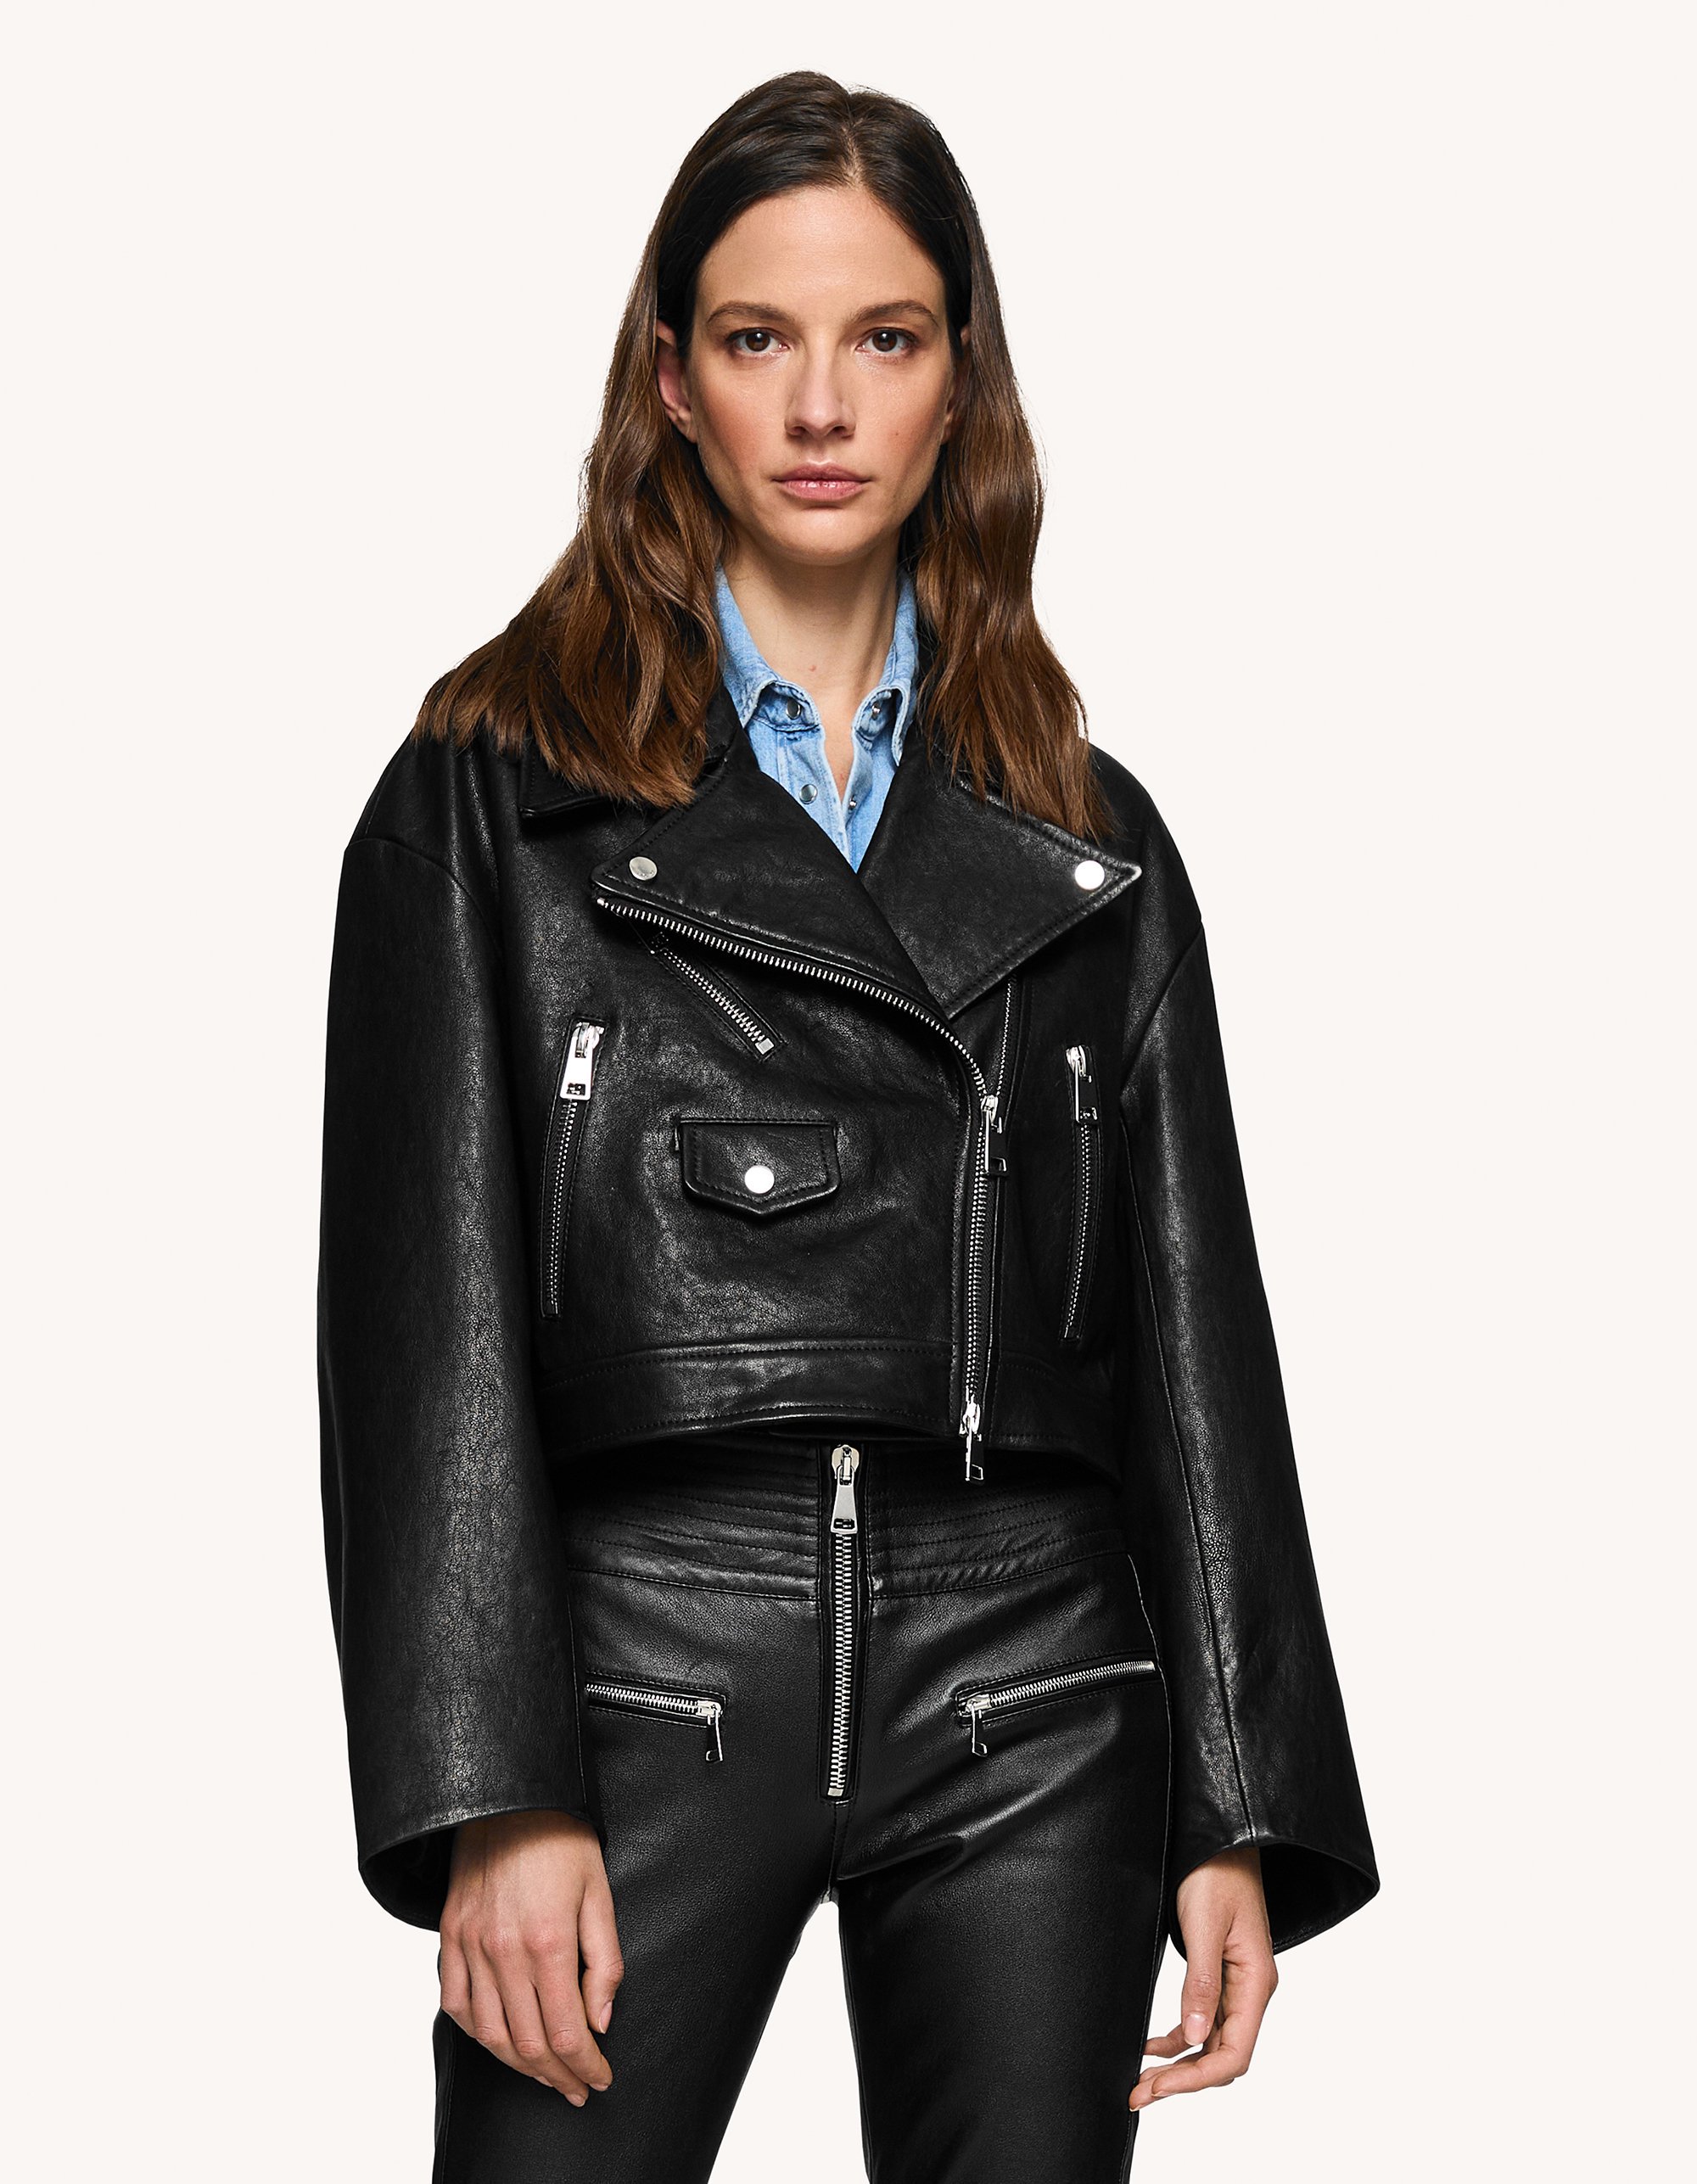 DOONDUPBoxy biker jacket nappa leather